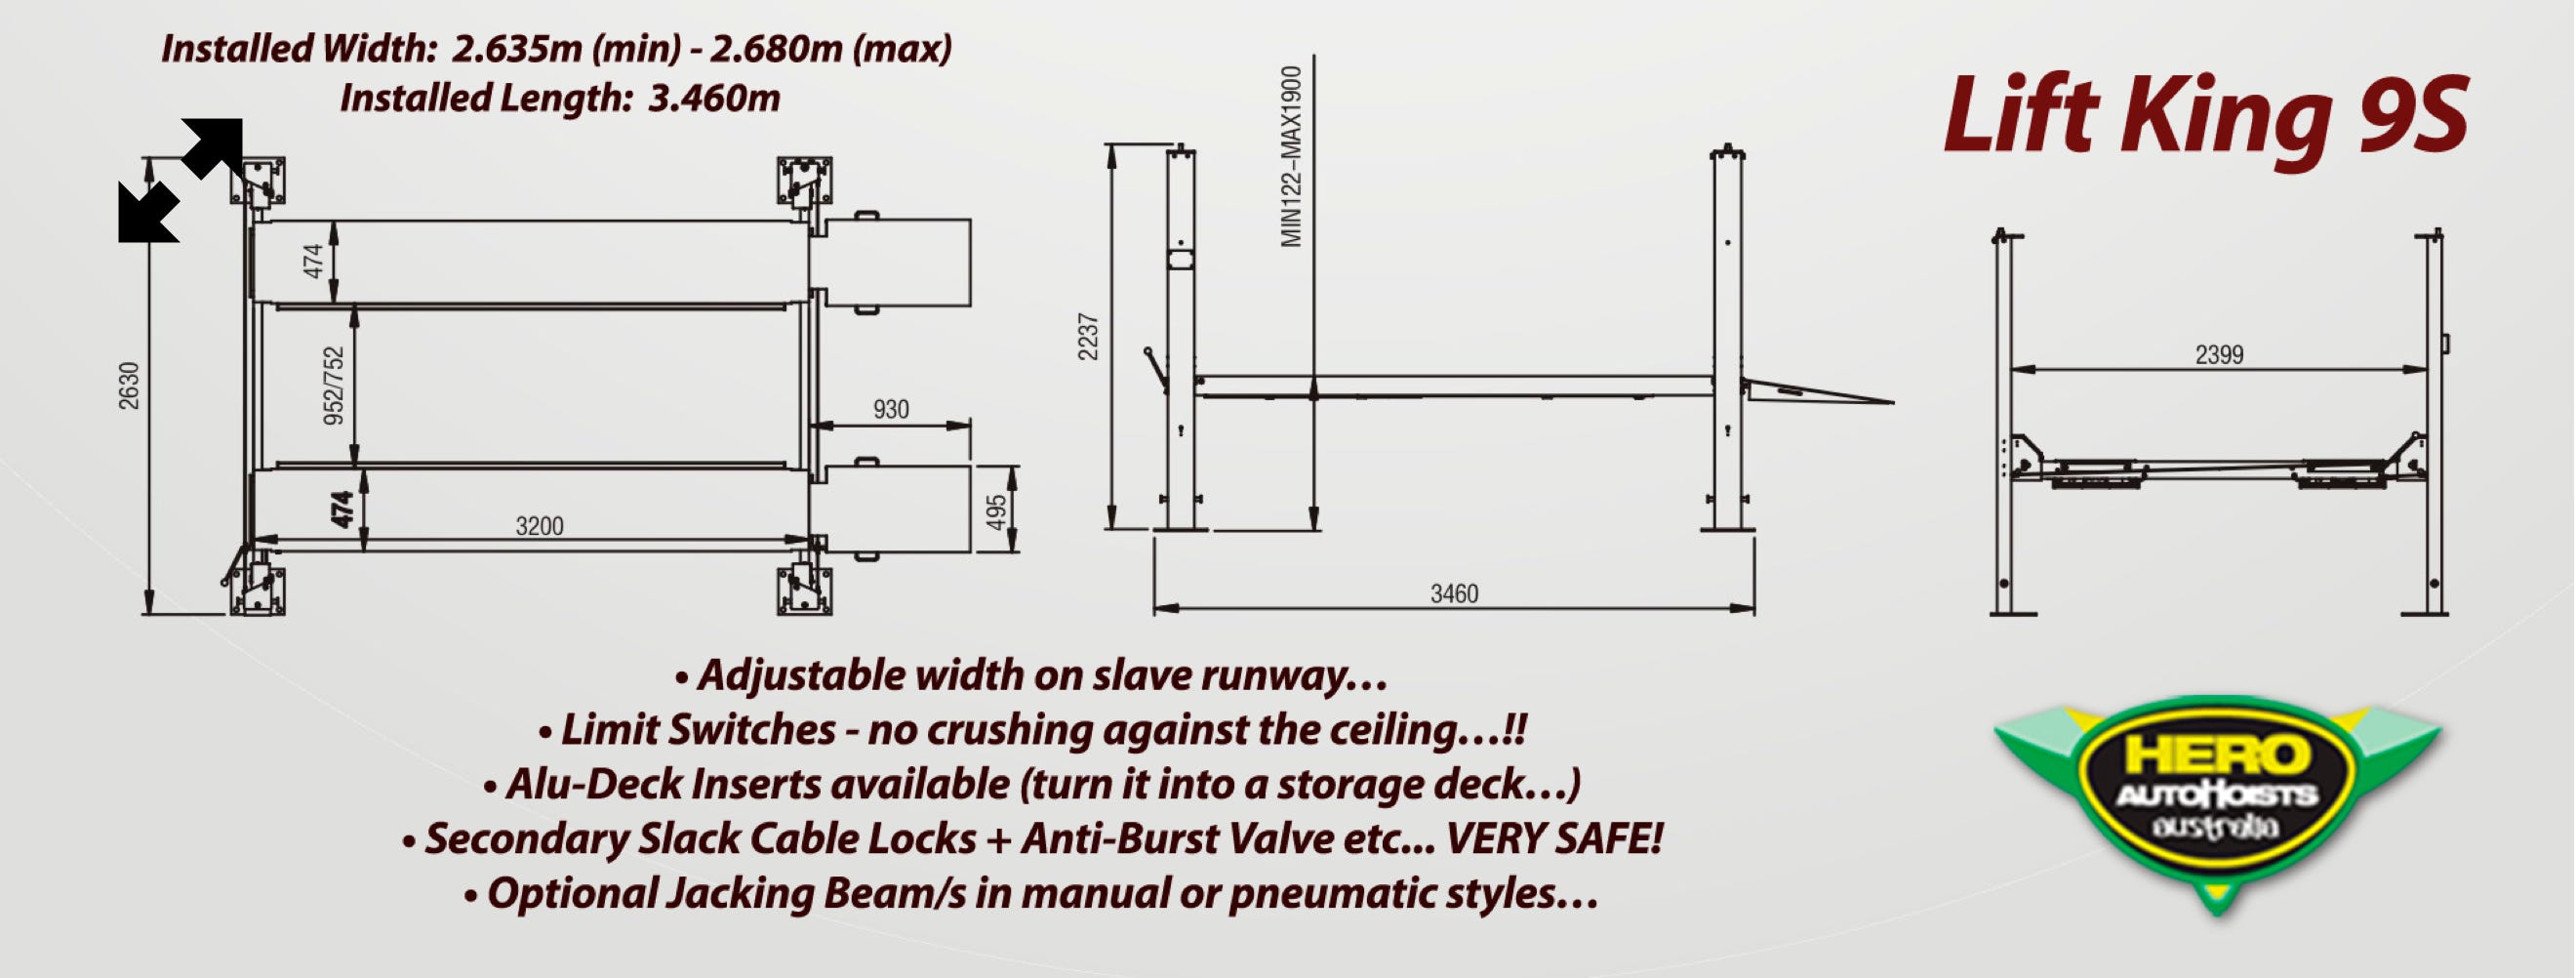 Specifications for Short-Length Model / Standard Lift Height. Adjustable Ladder-Lock System.  2nd Gen Design. Euro Certified. 4000kgs Capacity